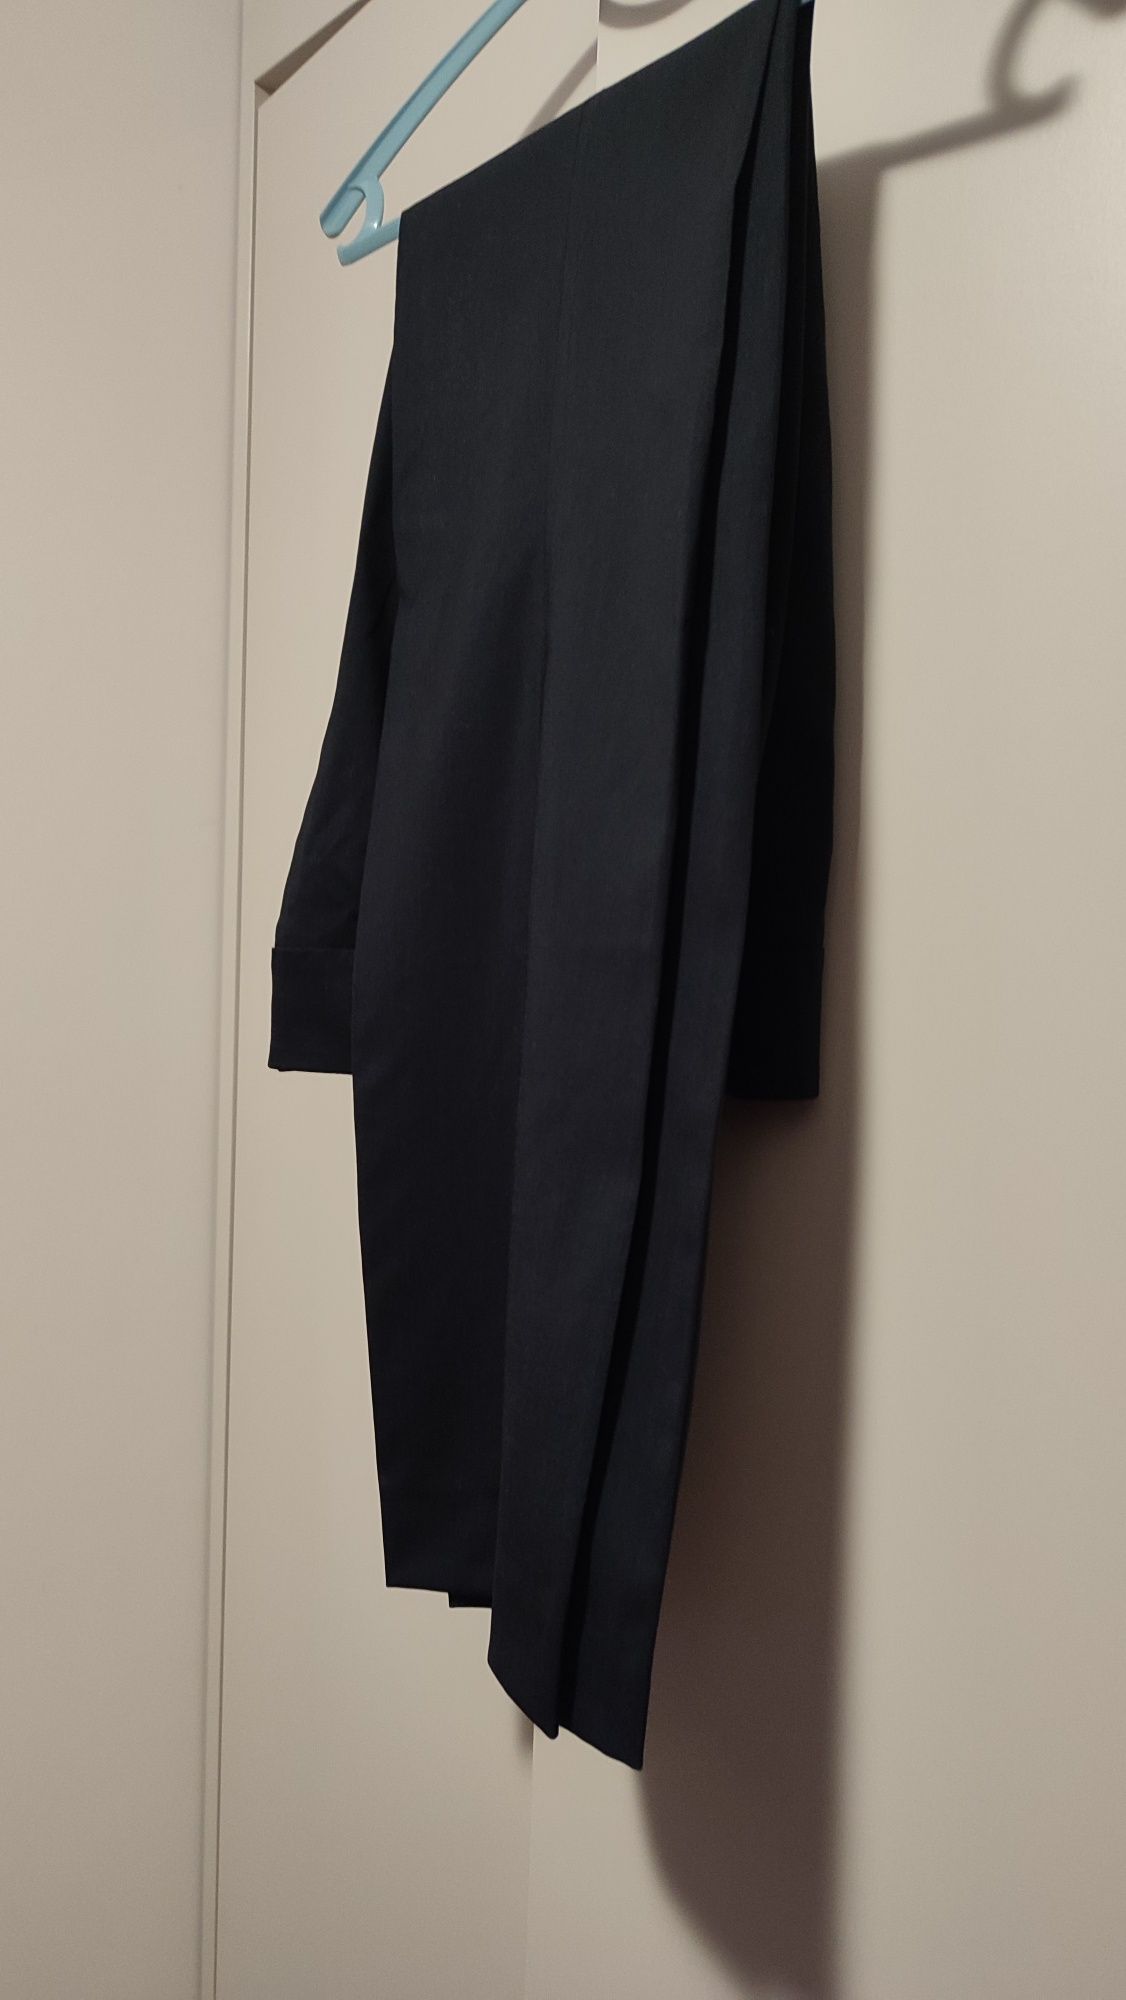 Жіночі брюки Hugo Boss, натуральна шерсть